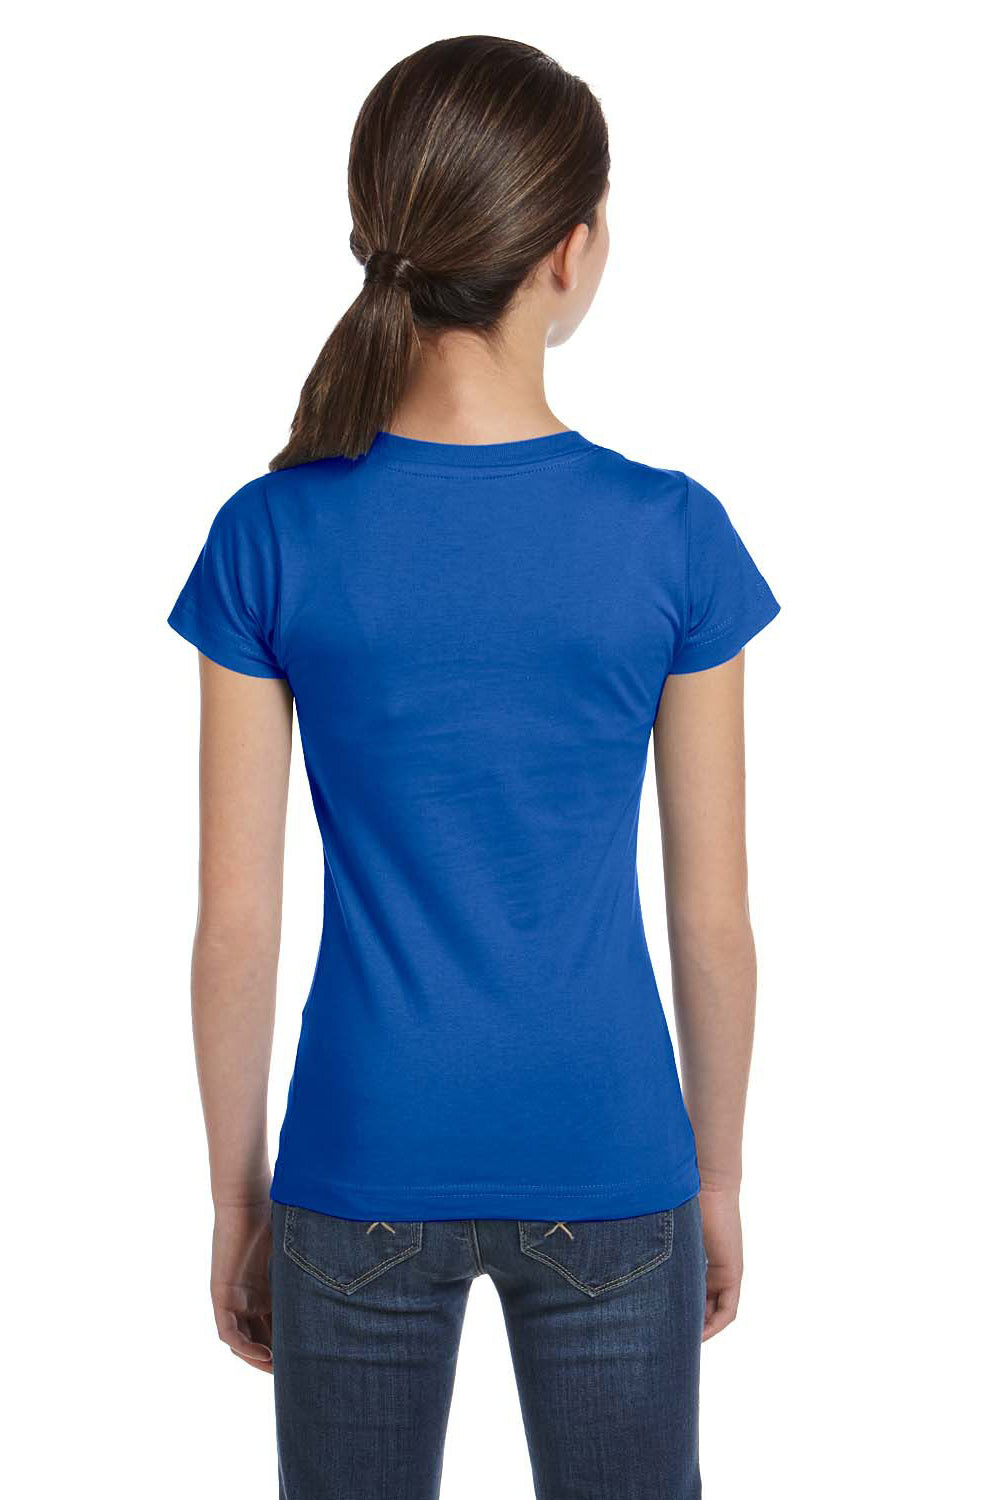 LAT 2616 Youth Fine Jersey Short Sleeve Crewneck T-Shirt Royal Blue Back